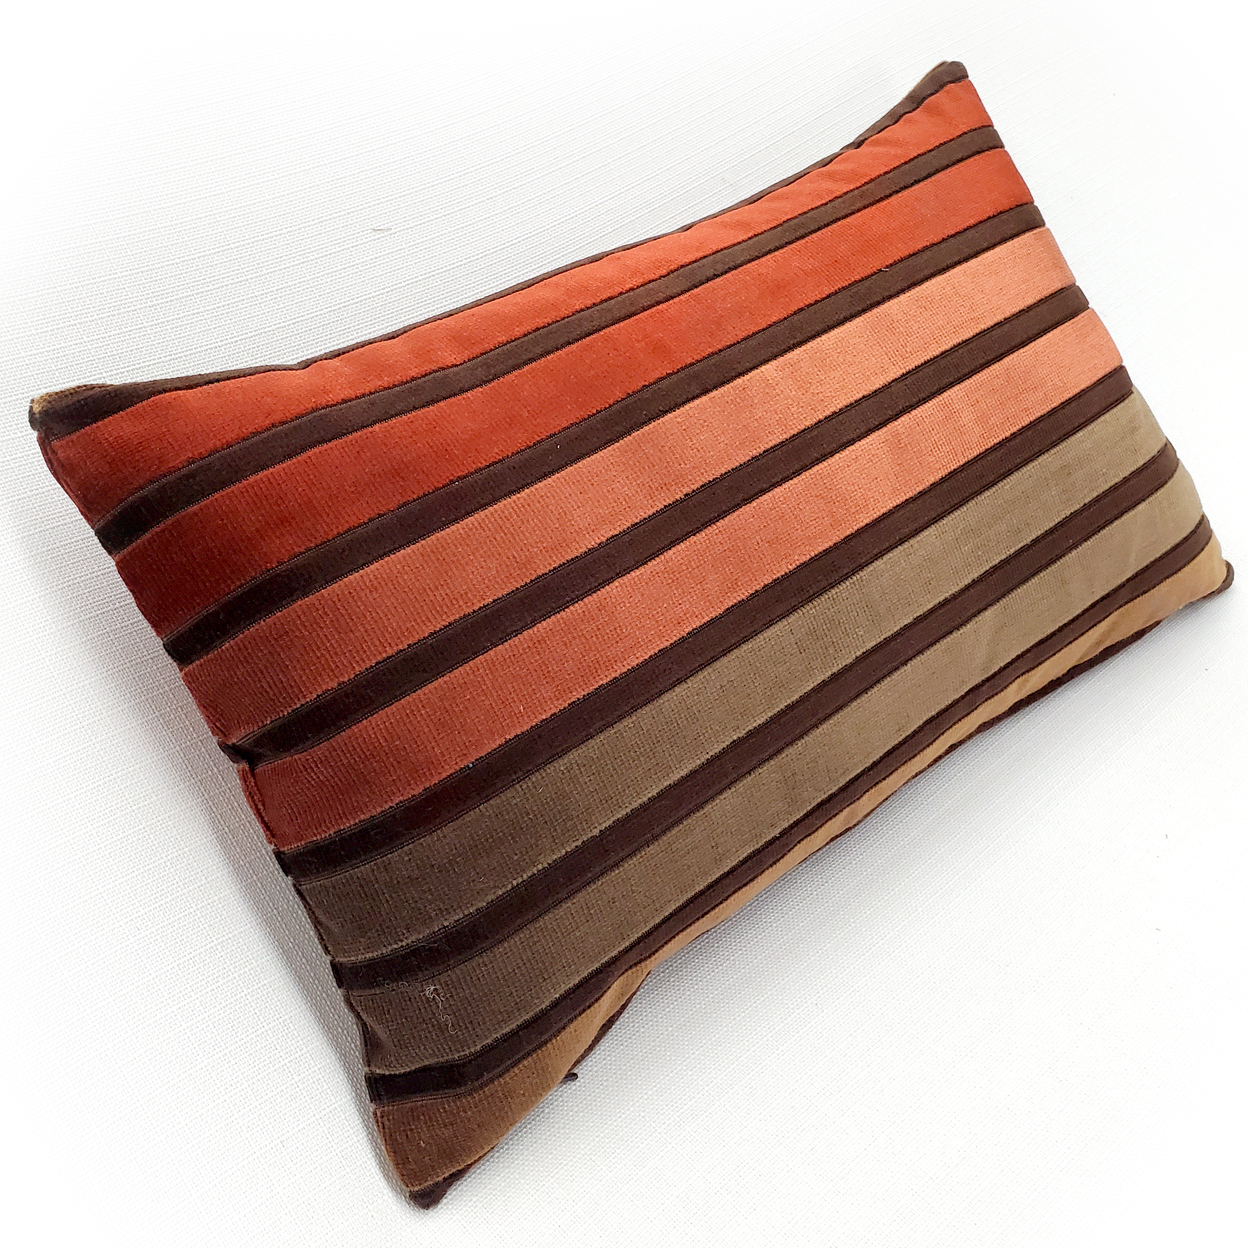 Canyon Stripes Textured Velvet Throw Pillow 12x20, With Polyfill Insert